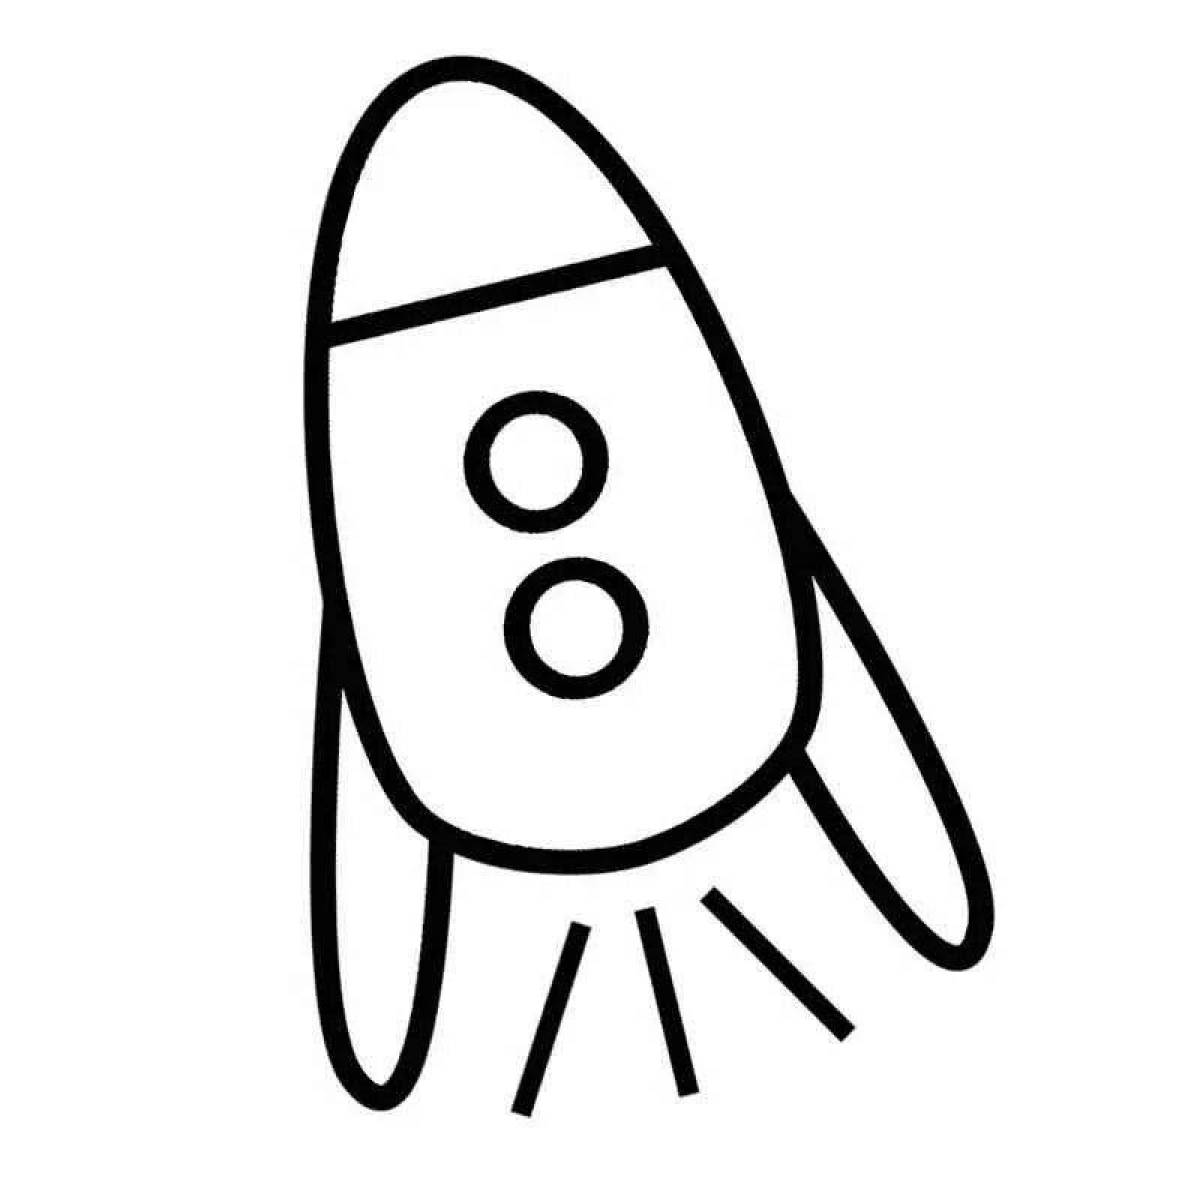 Funny rocket drawing